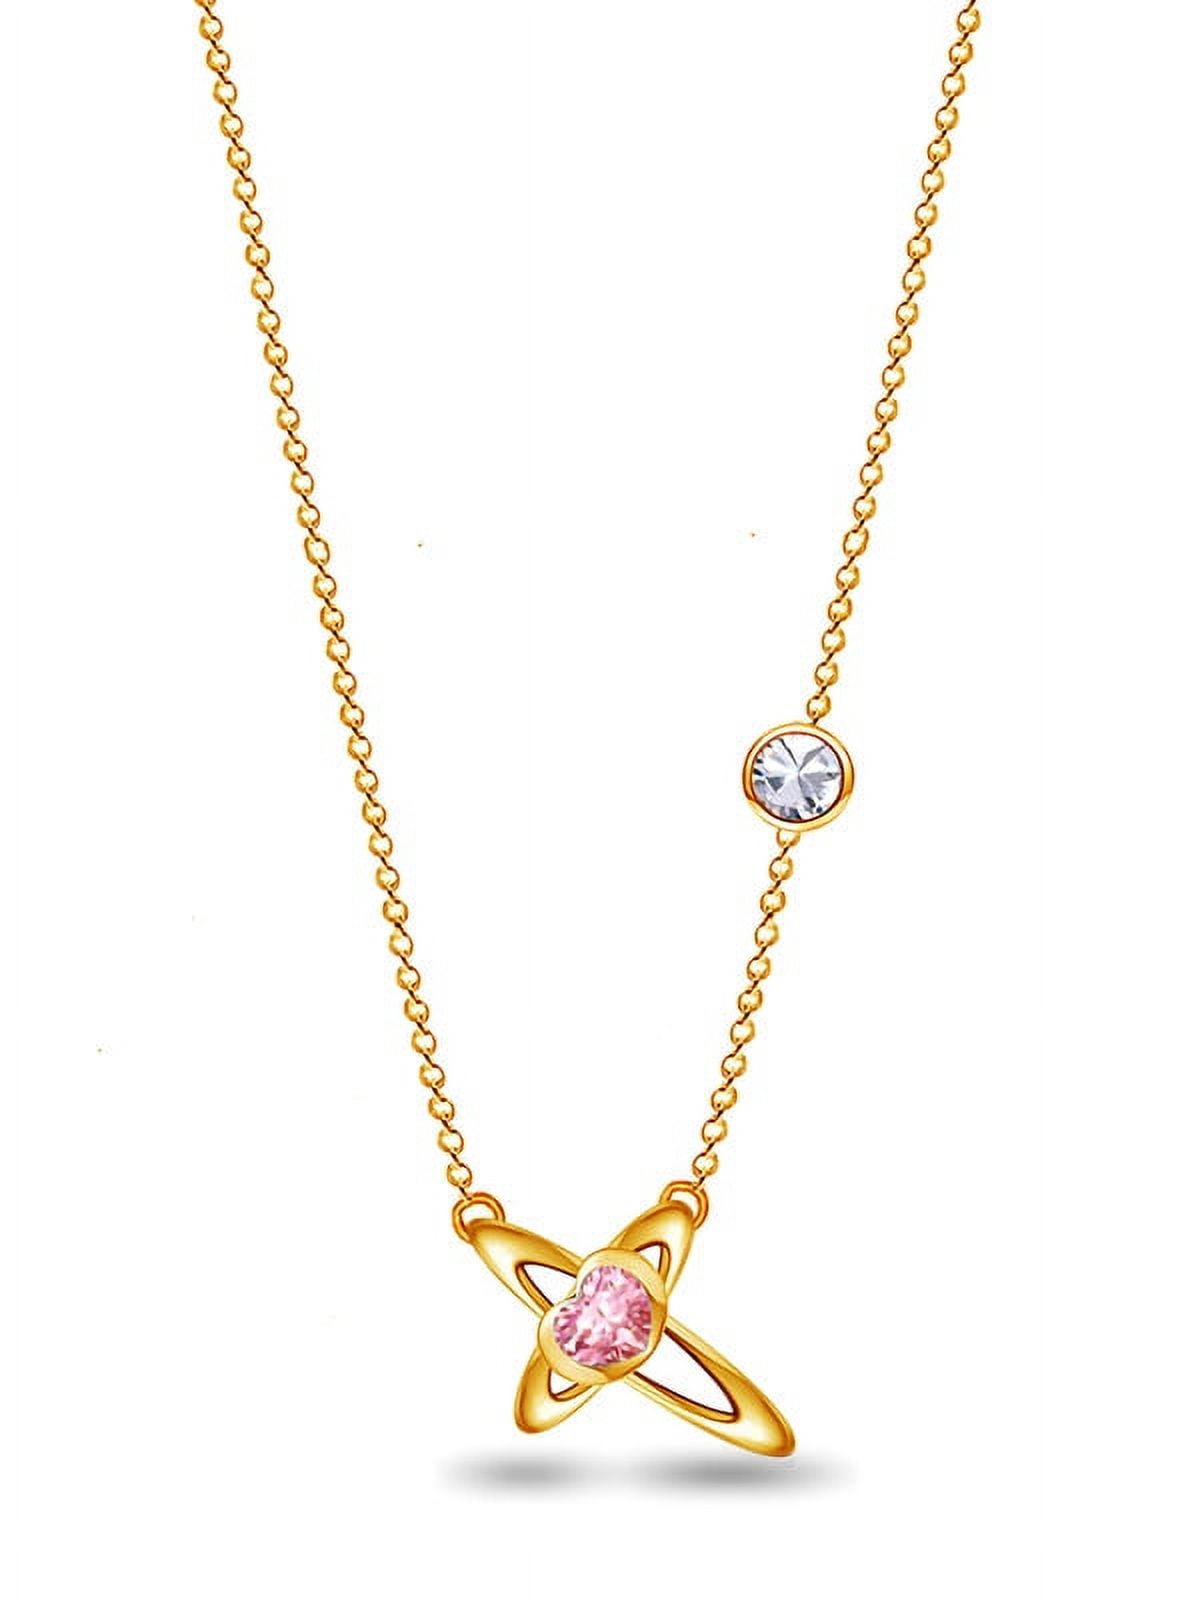 Louis Vuitton Monogram Idylle Necklace - Pink, 18K Yellow Gold